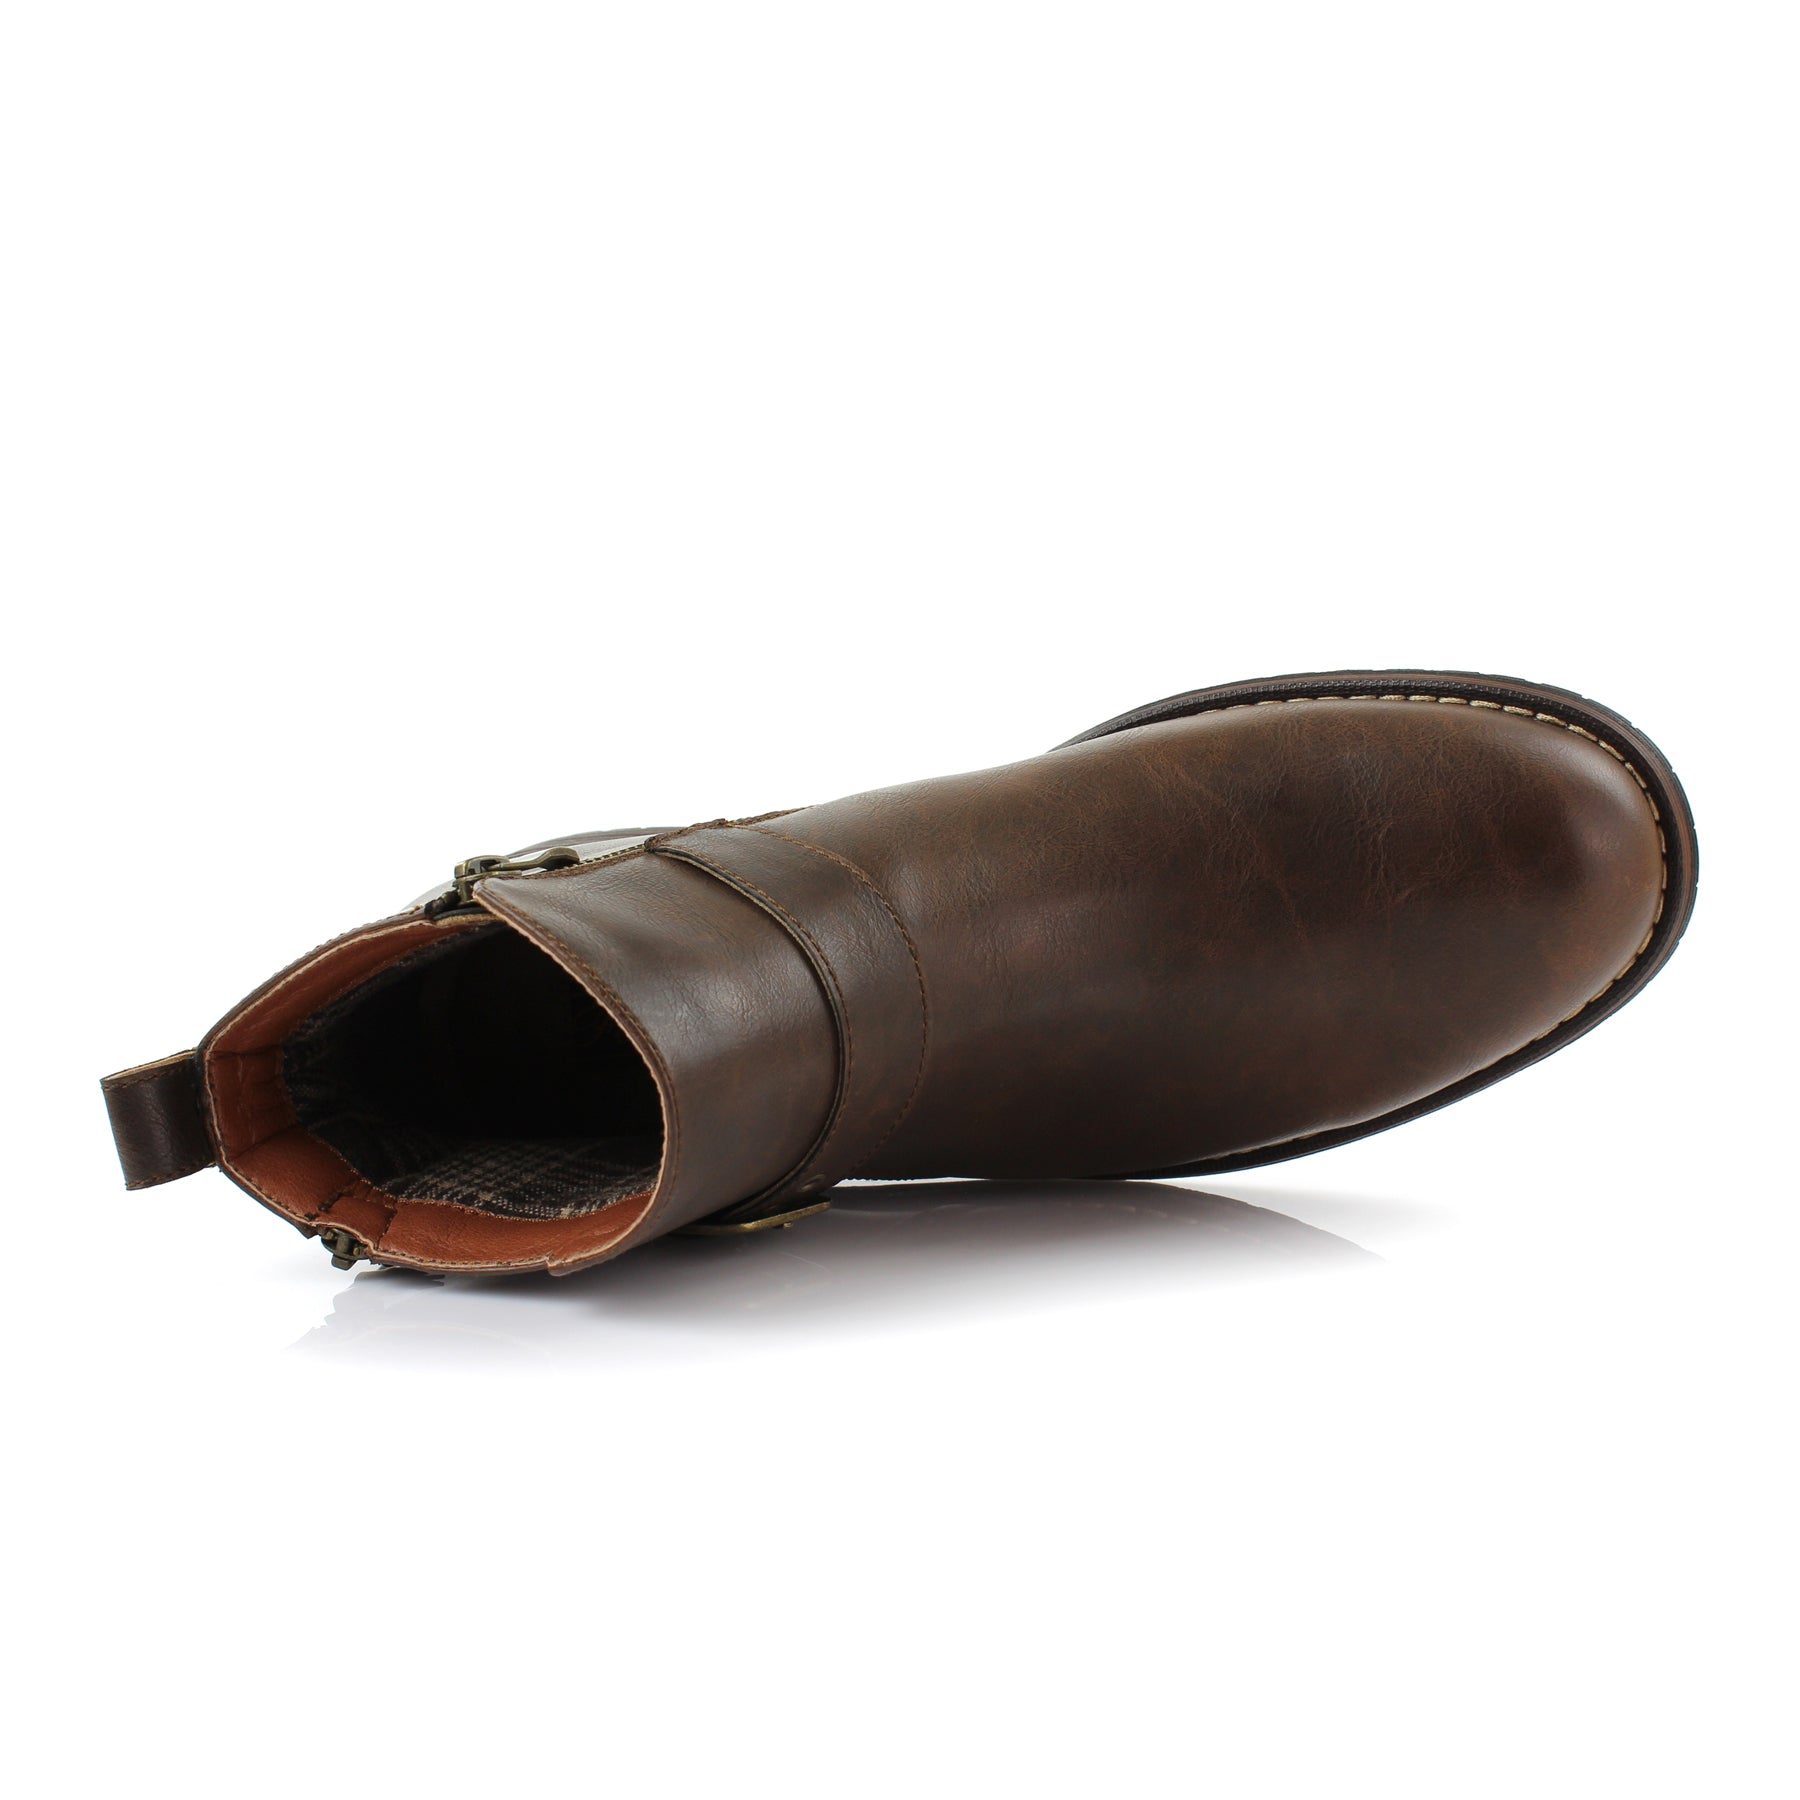 Slip-On Buckle Chelsea Boots | Dalton by Ferro Aldo | Conal Footwear | Top-Down Angle View